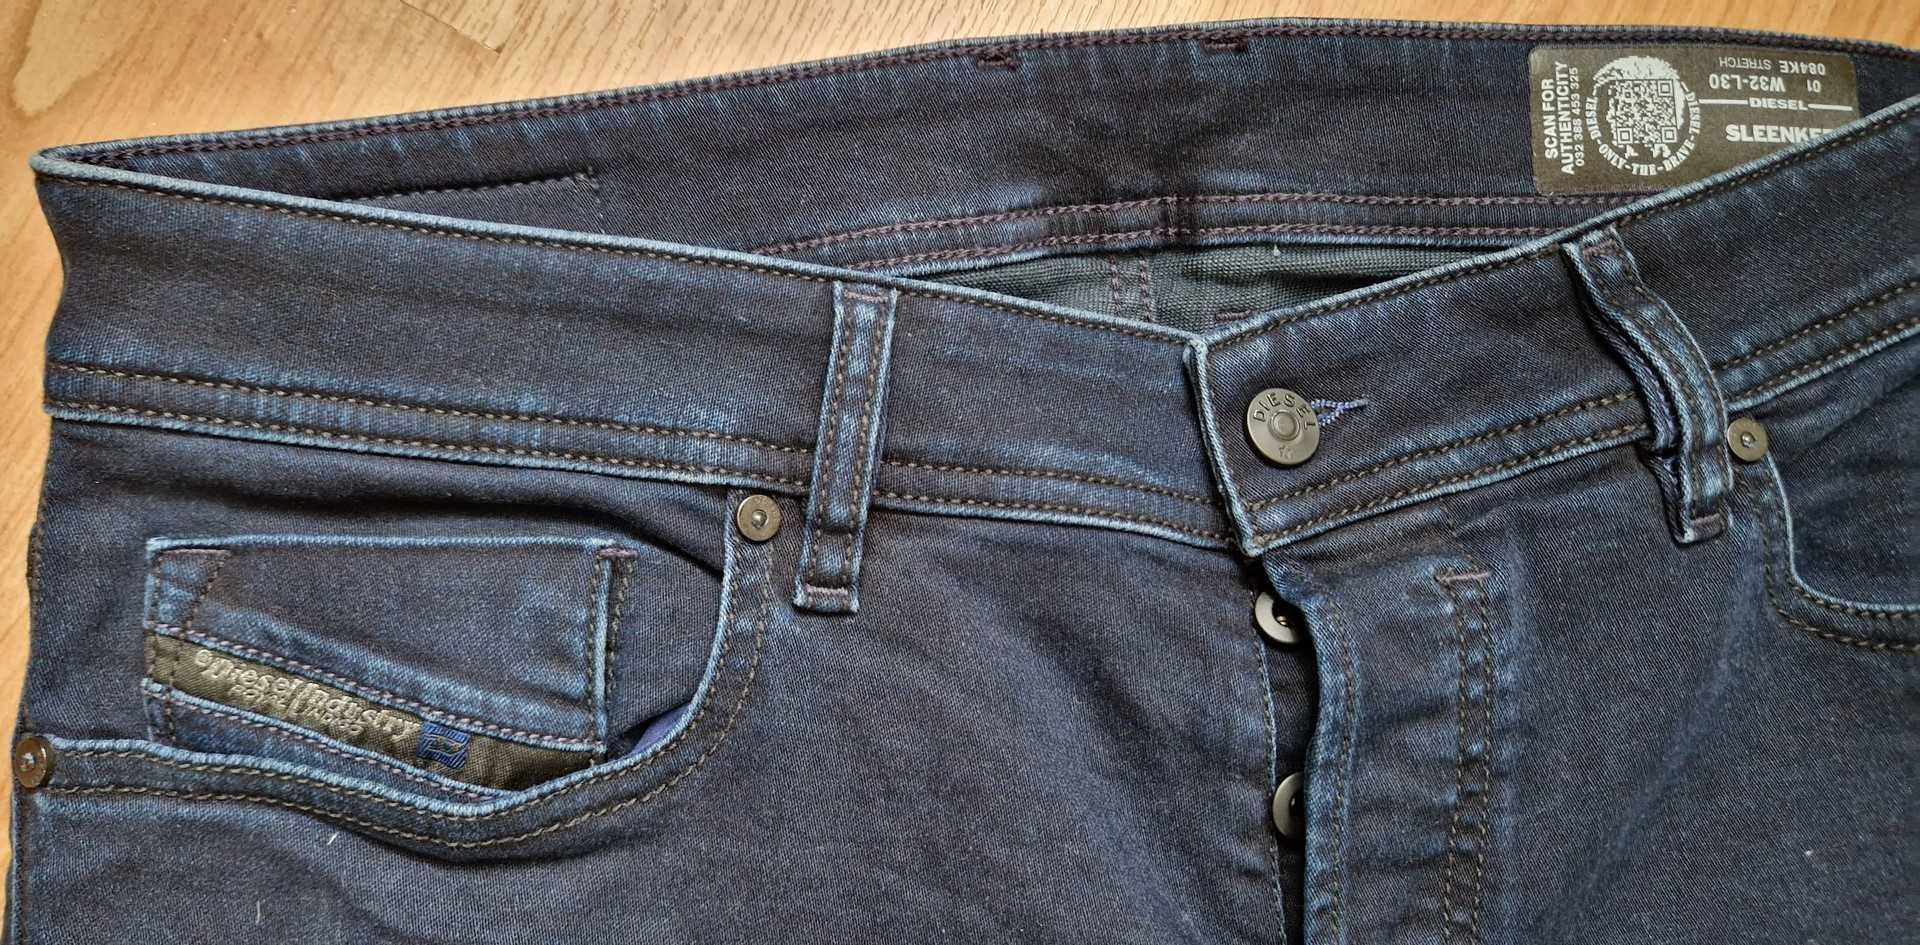 Spodnie męskie jeans Diesel Sleenker W32L30